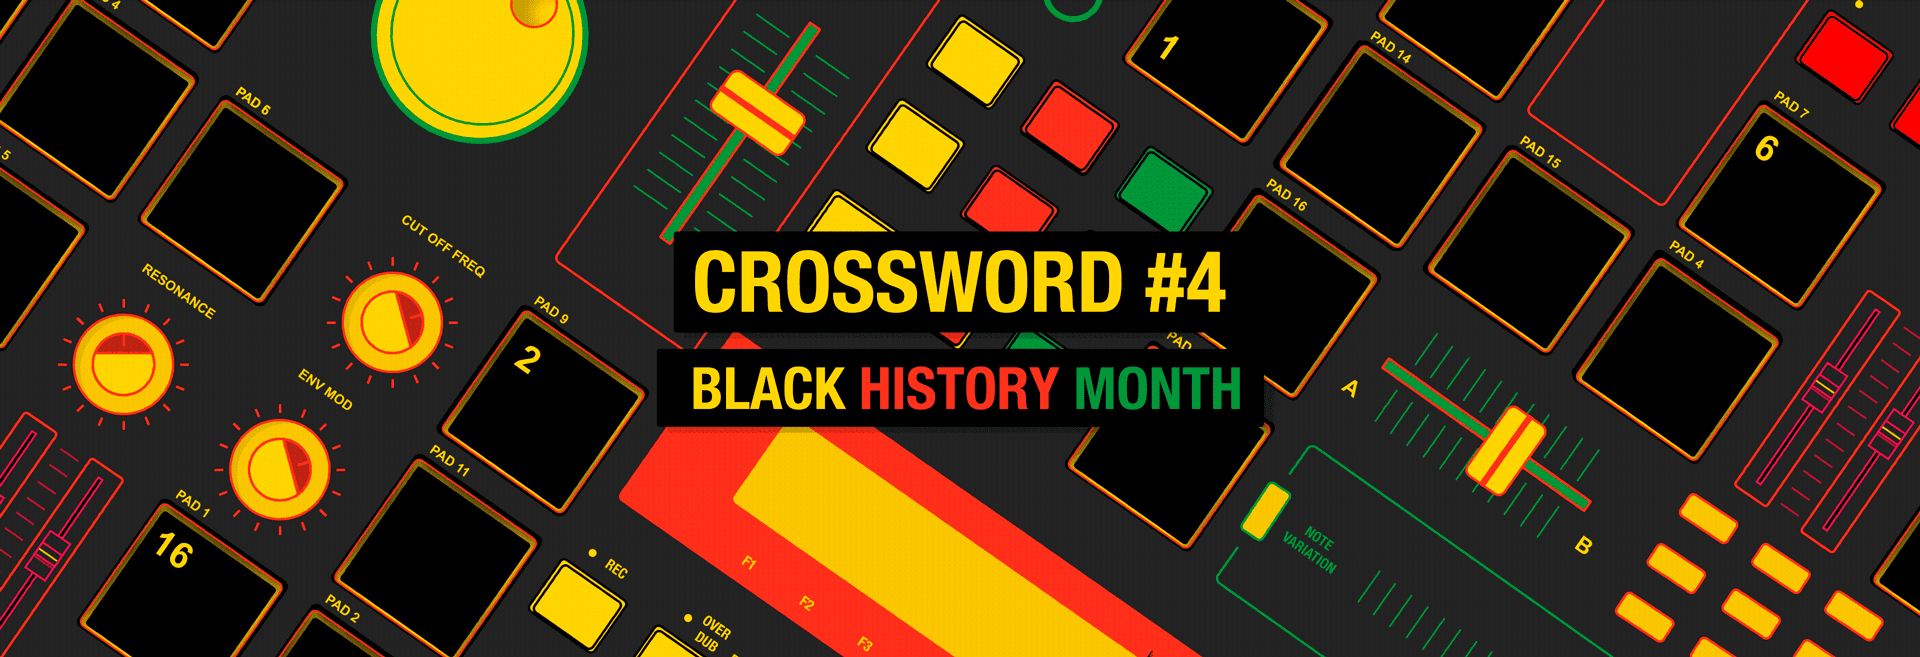 crossword-4-black-history-month-attack-magazine